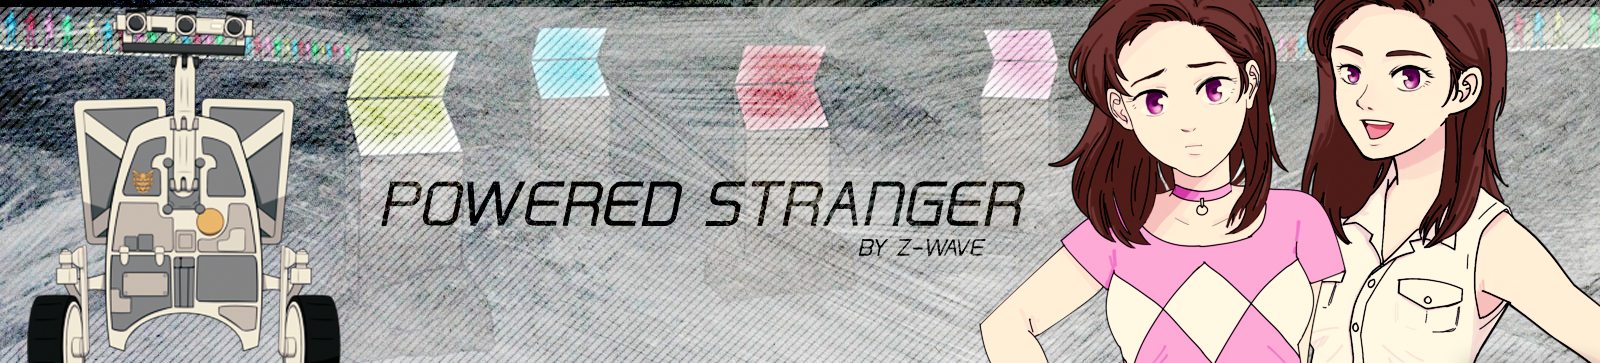 Z-Wave - Powered Stranger - Version 0.50